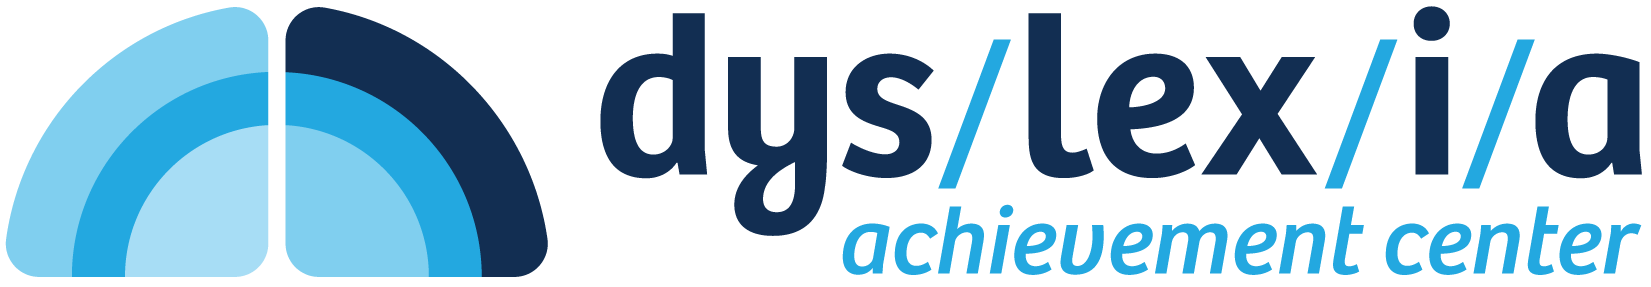 Dyslexia Achievement Center logo